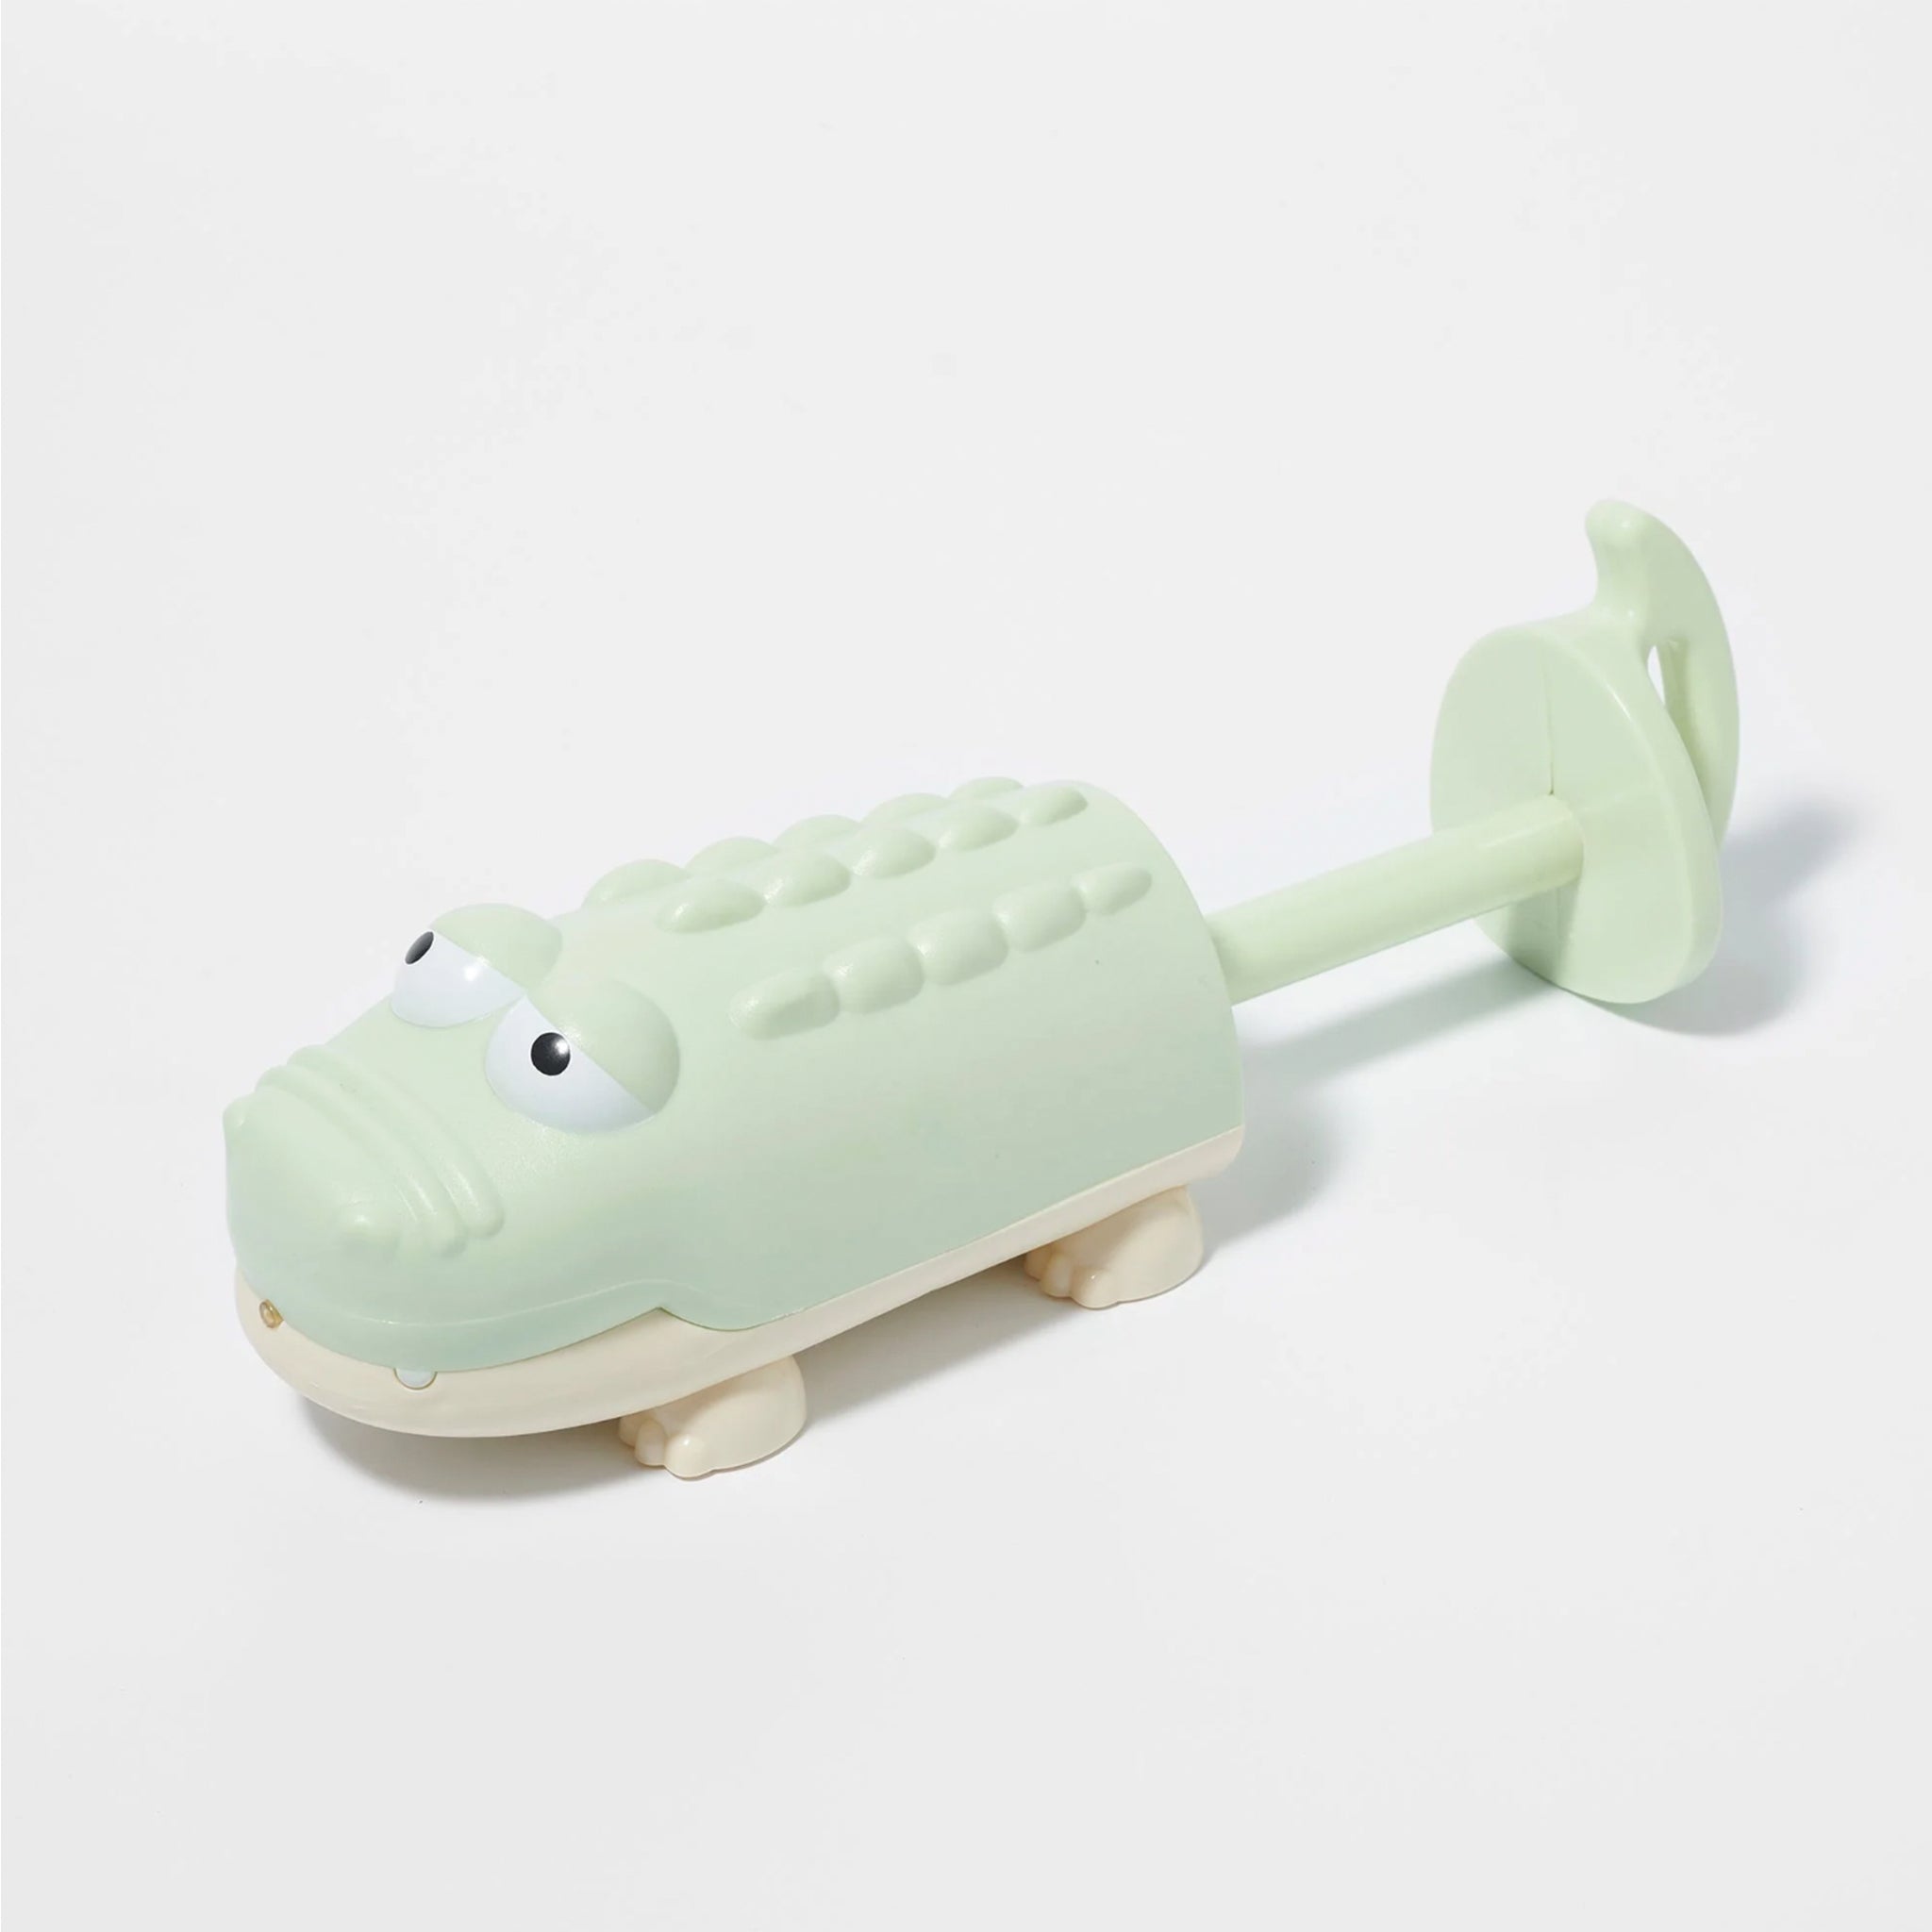 A crocodile shaped beach, pool or bath toy in a green and cream shade.